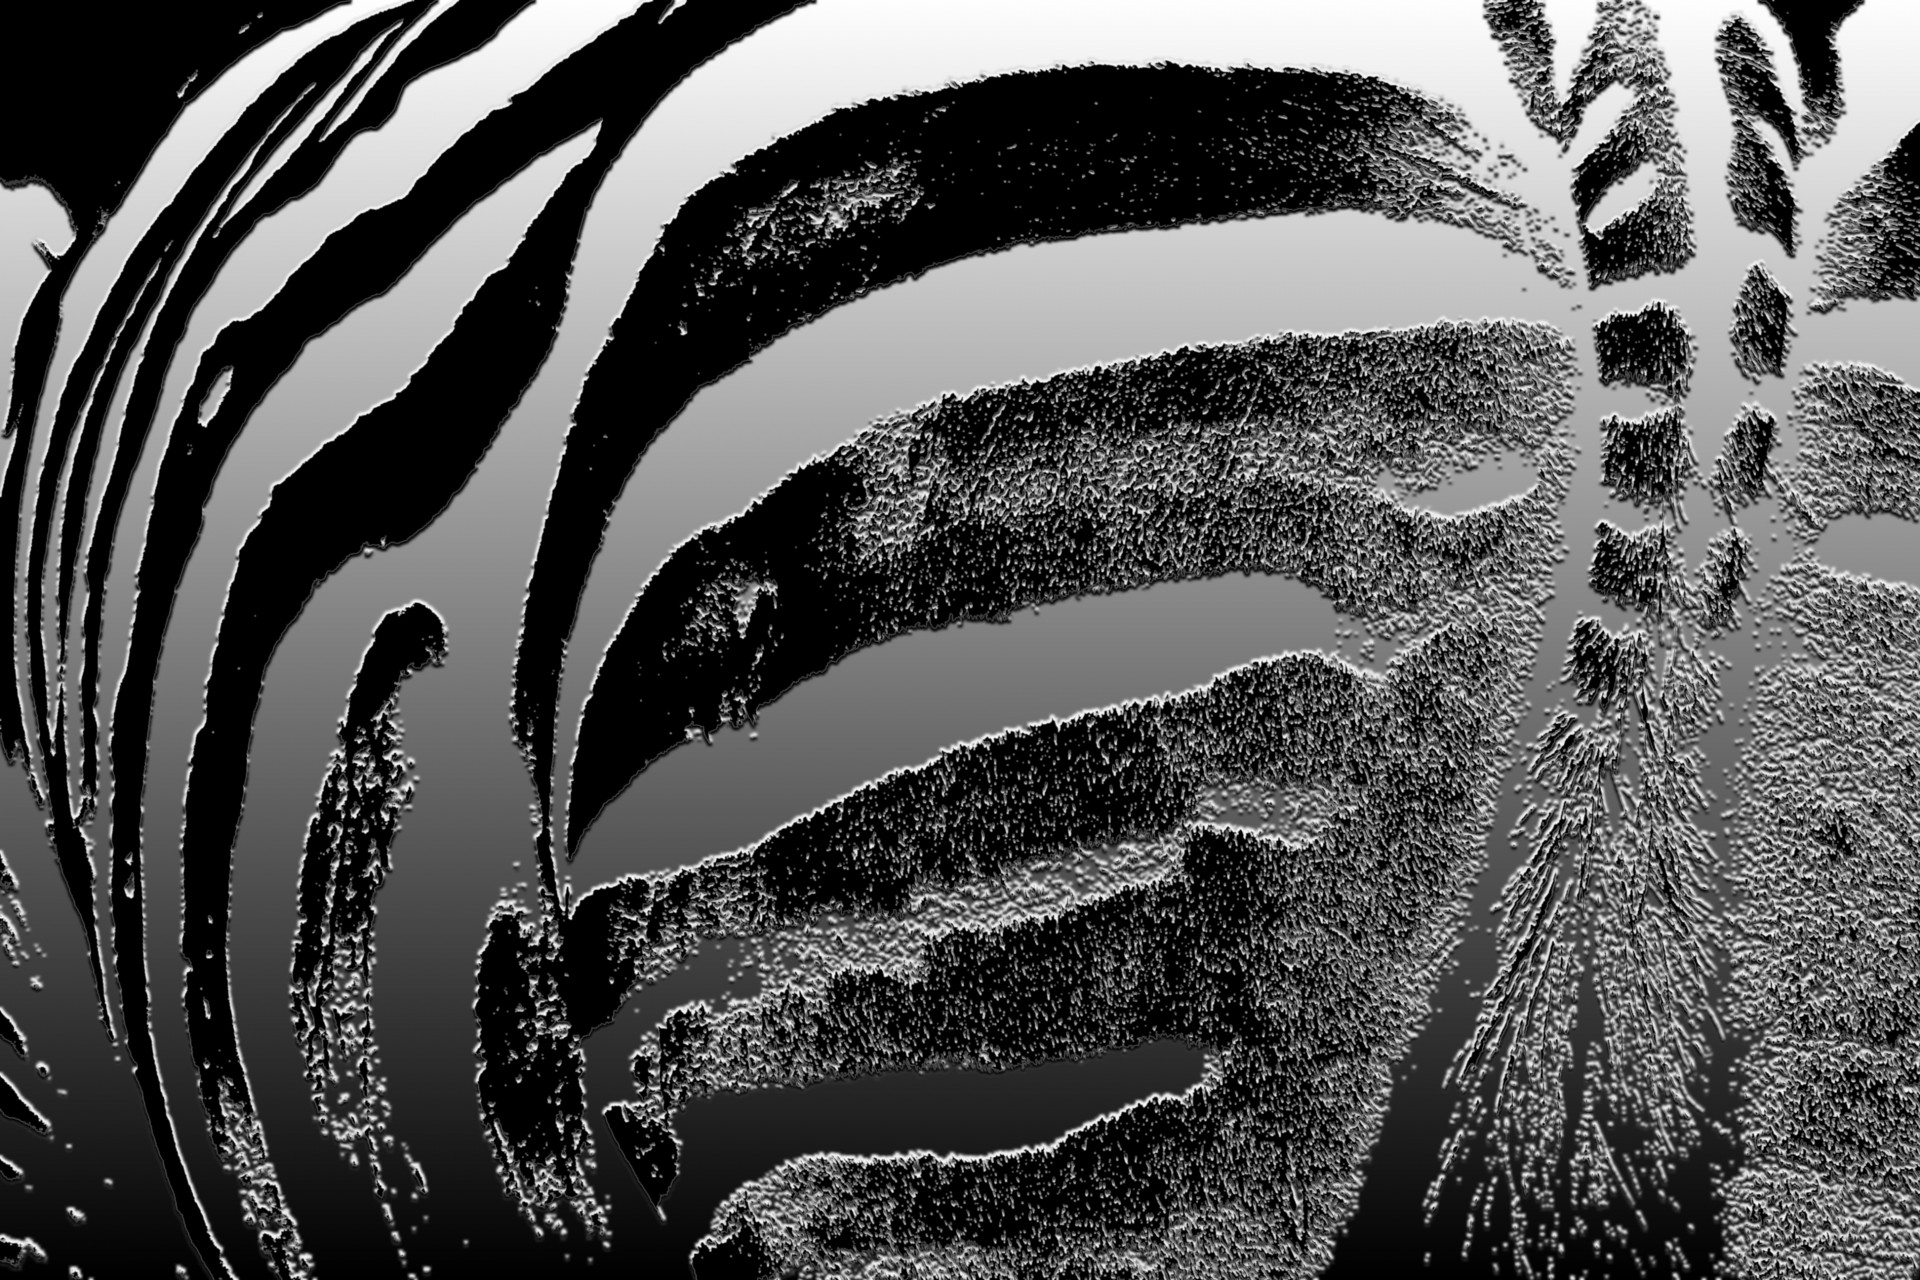 Download free photo of Zebra,striped,black,white,buttock - from needpix.com